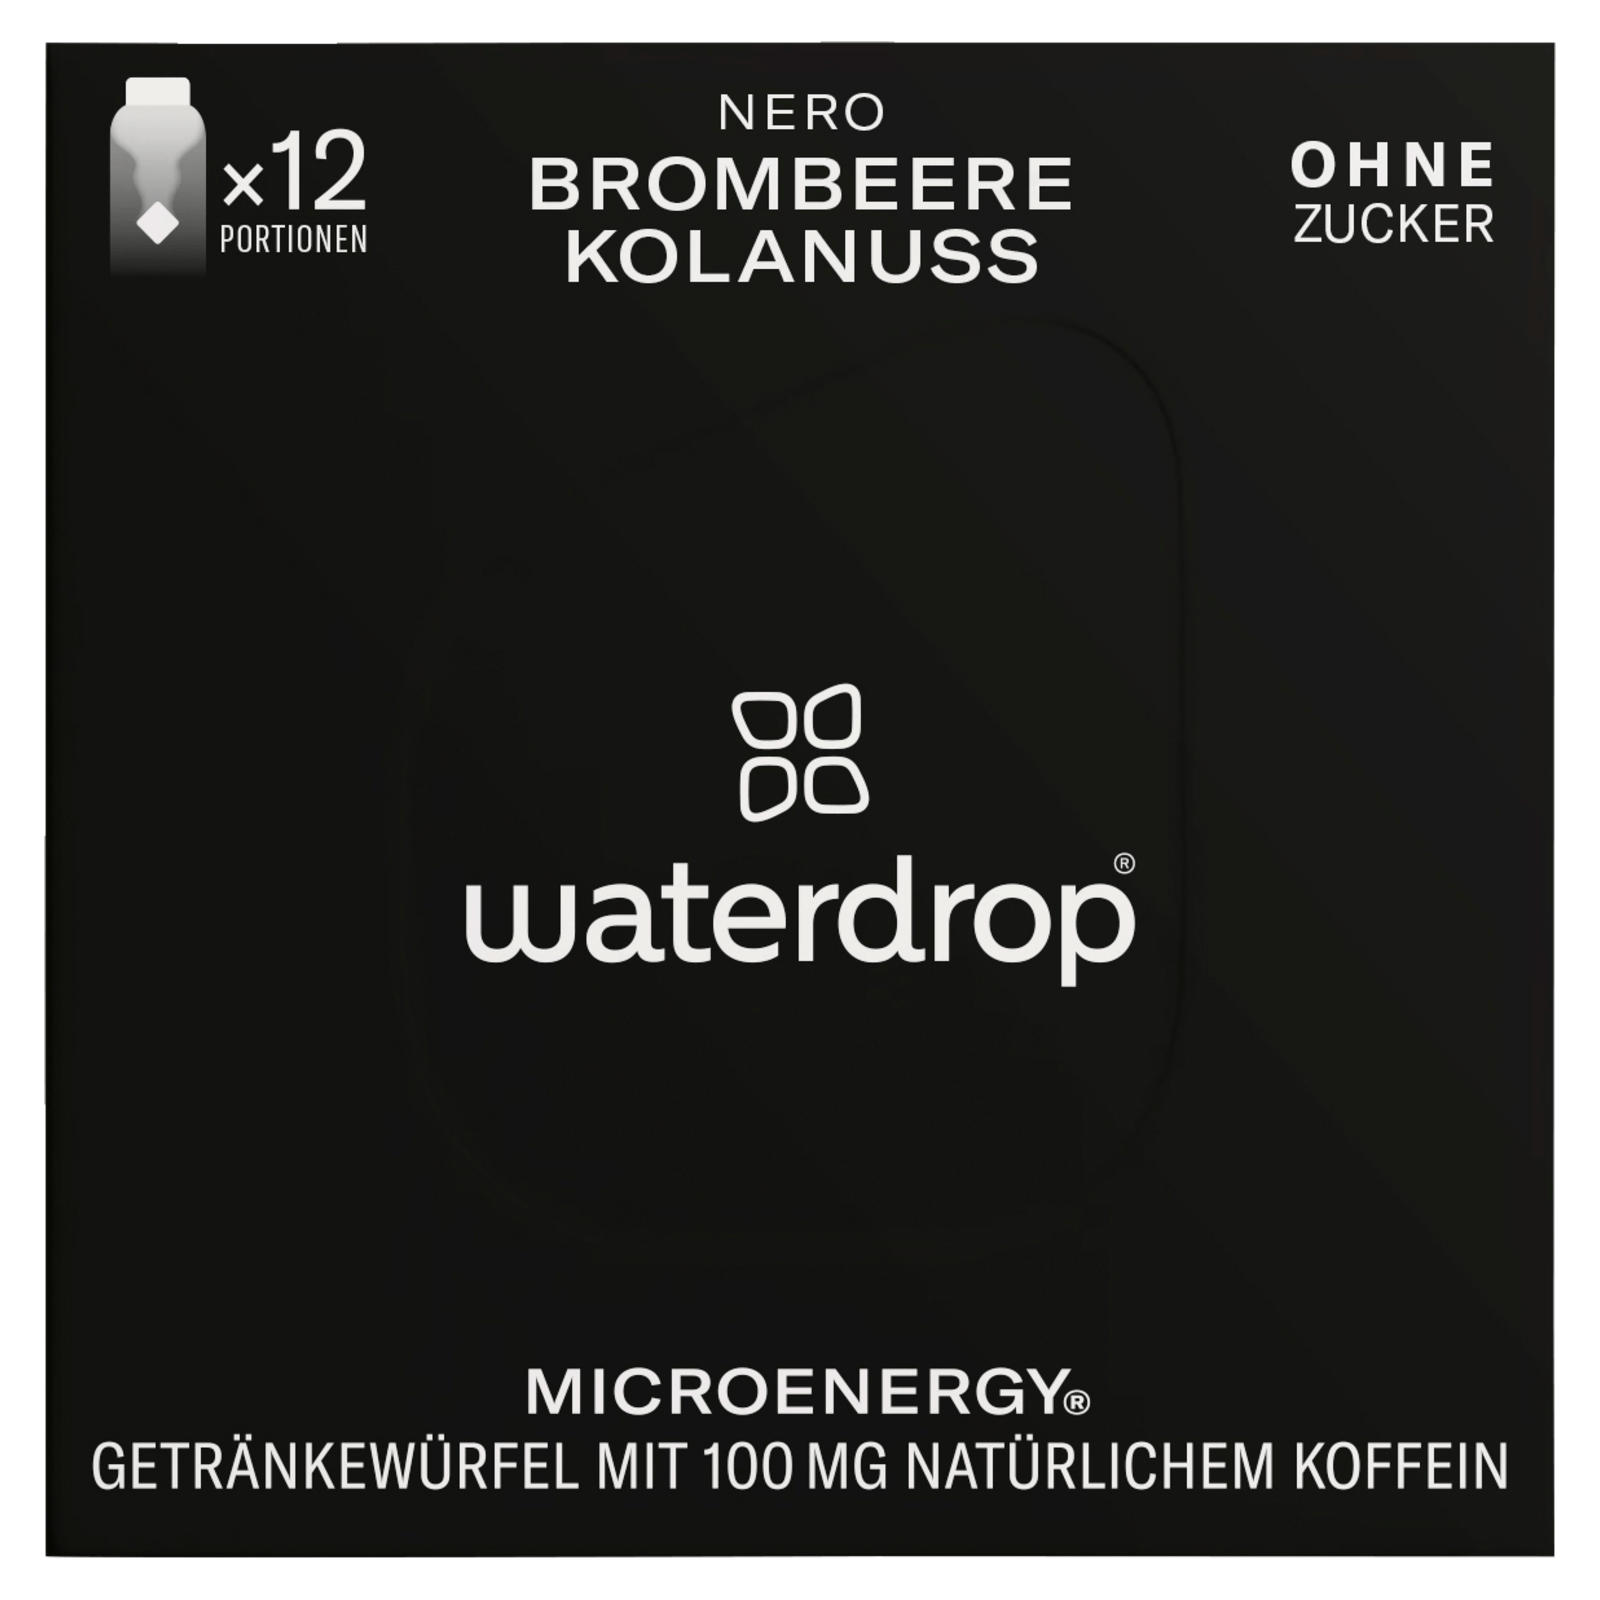 Waterdrop Microdrink Nero 24g bei REWE online bestellen!